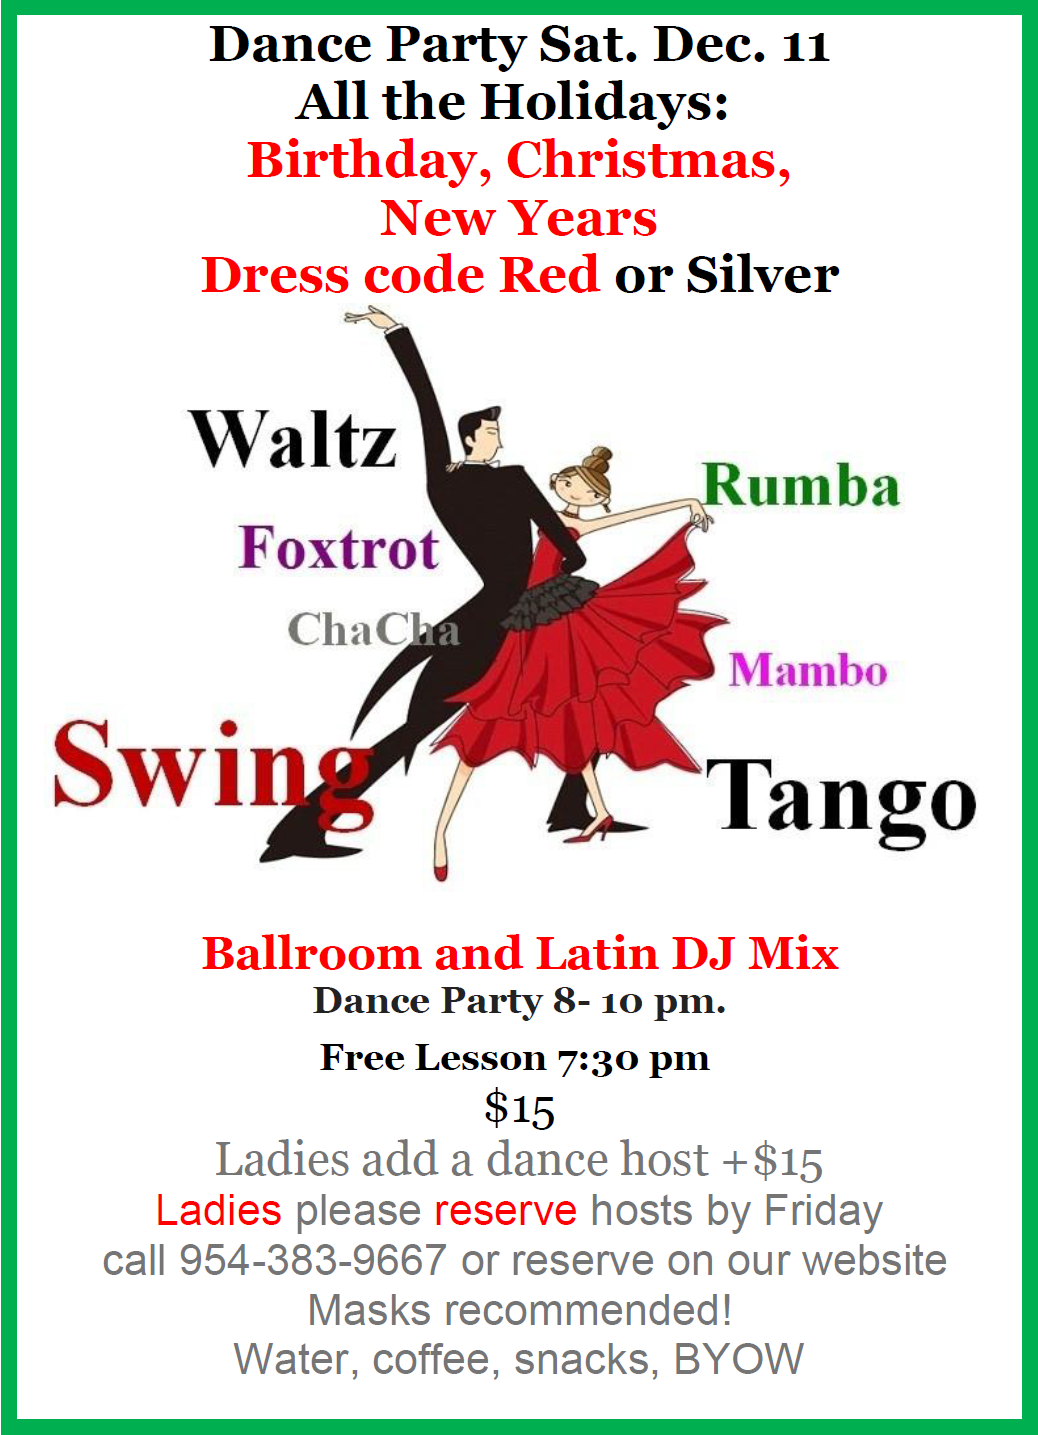 Saturday, December 11 Holiday Dance Party at Star Ballroom!